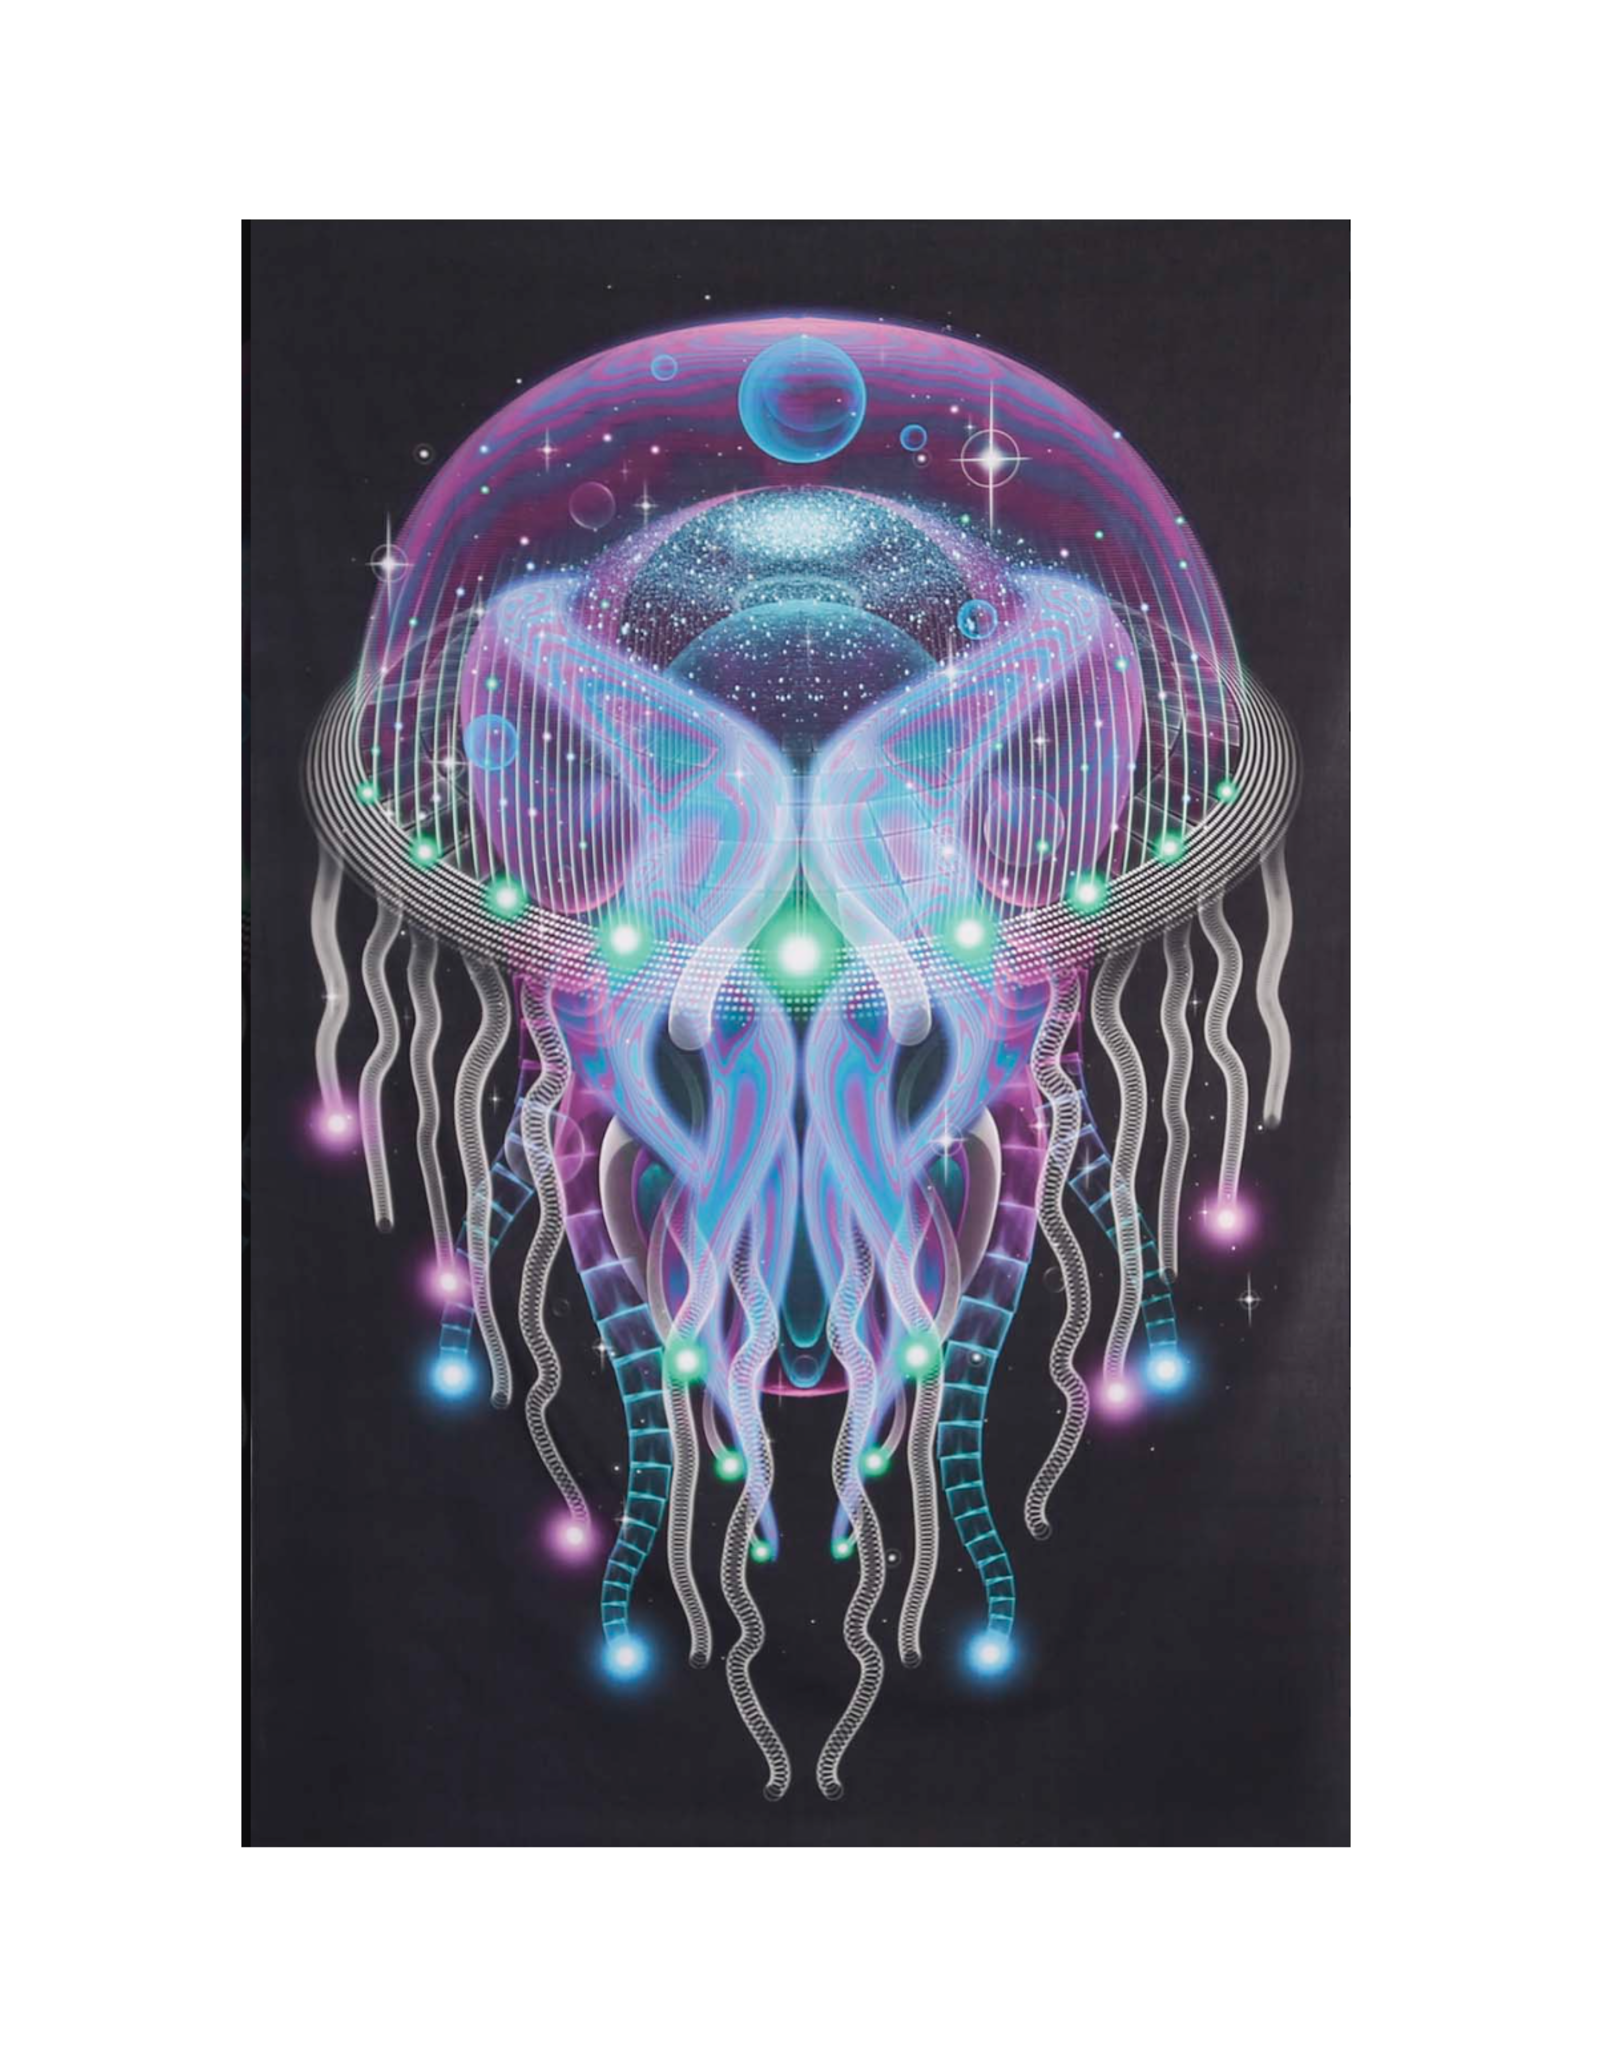 Psychezoa Luminosum Heady Art Print Tapestry 53"X85" - Artwork by Samuel Farrand